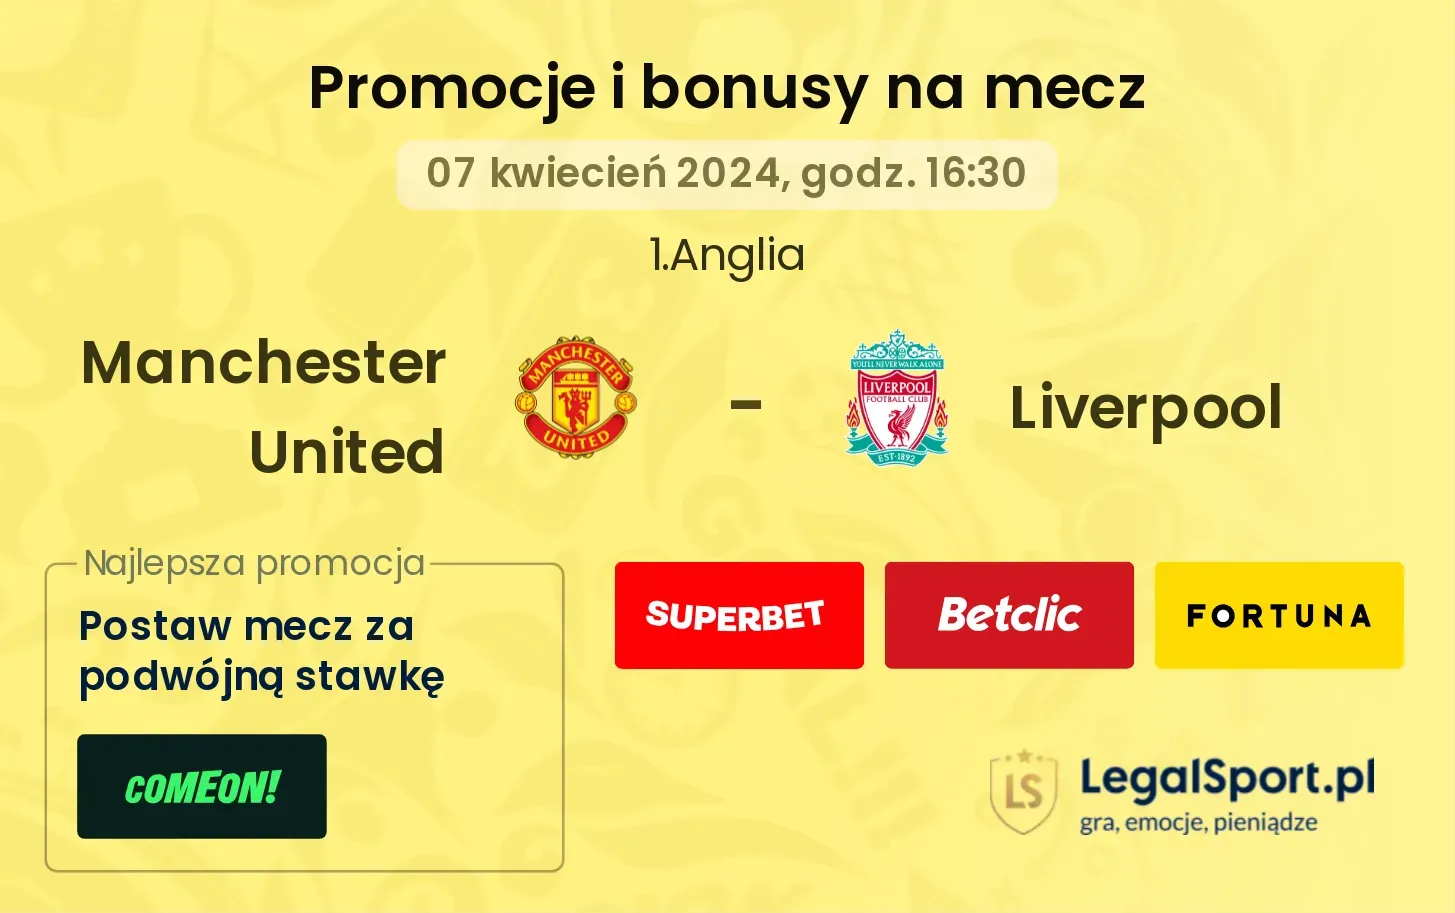 Manchester United - Liverpool promocje bonusy na mecz